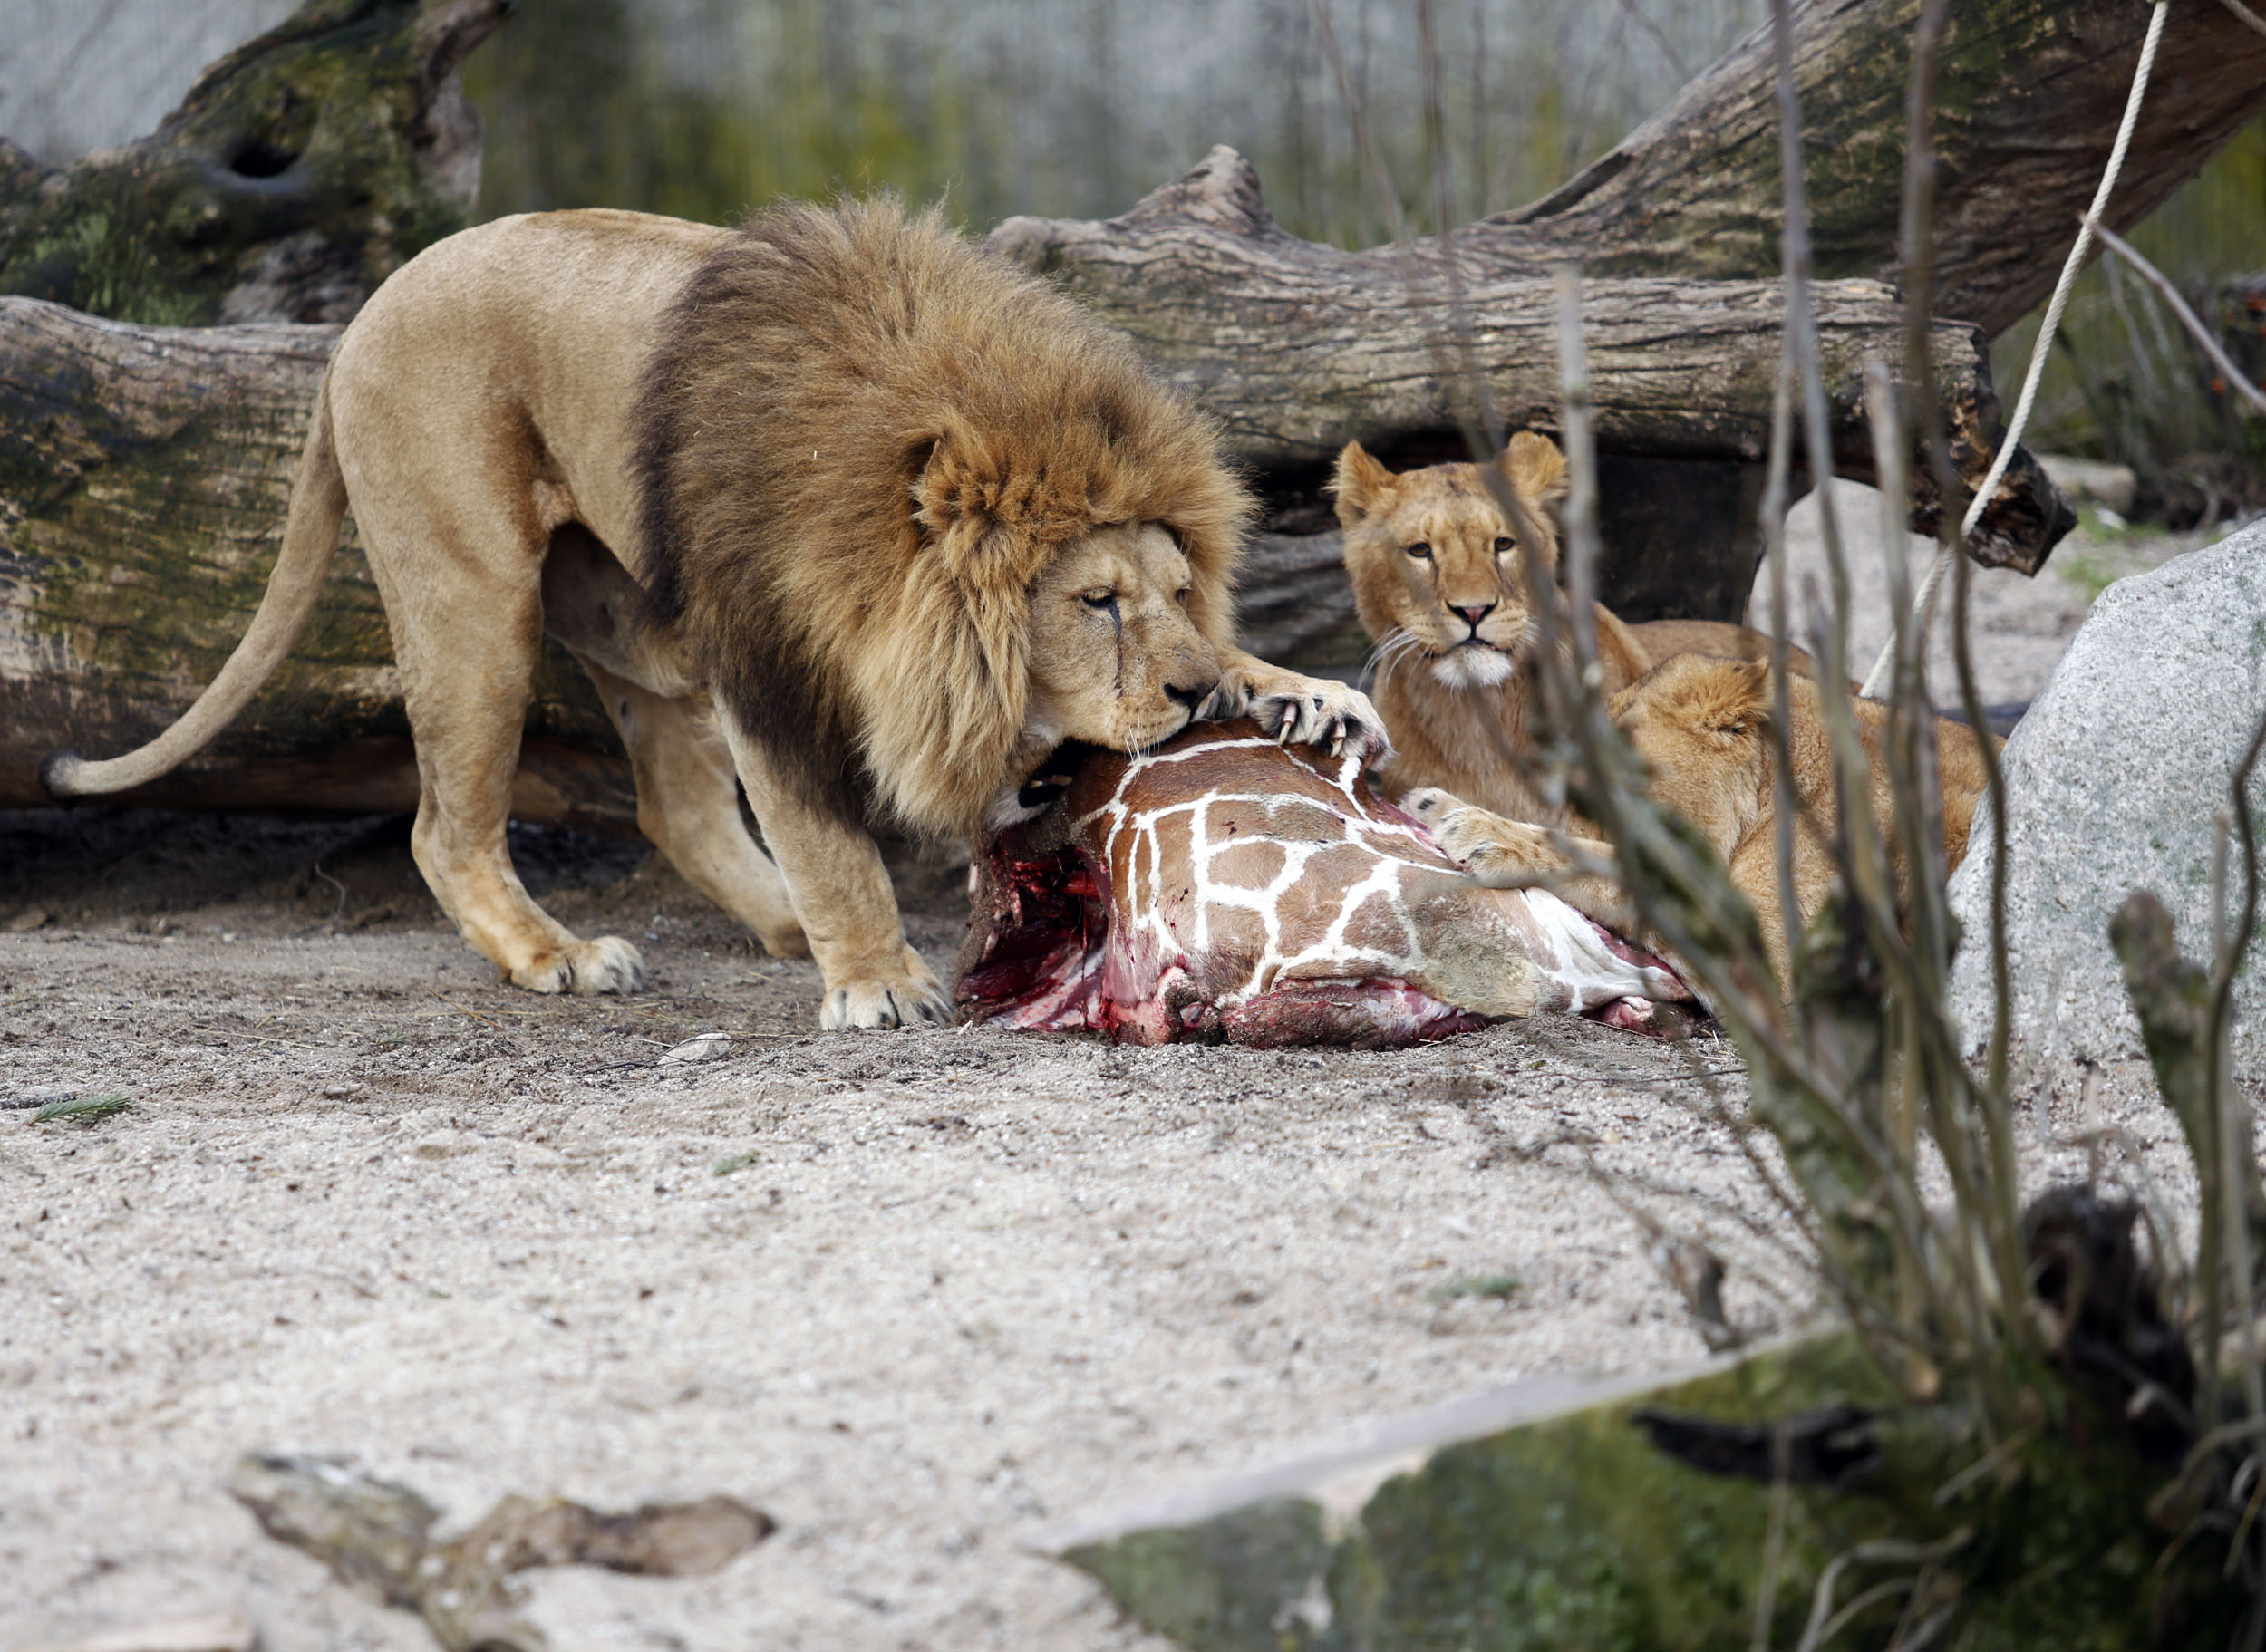 Report: Danish zoo that killed giraffe also kills 4 lions - CBS News